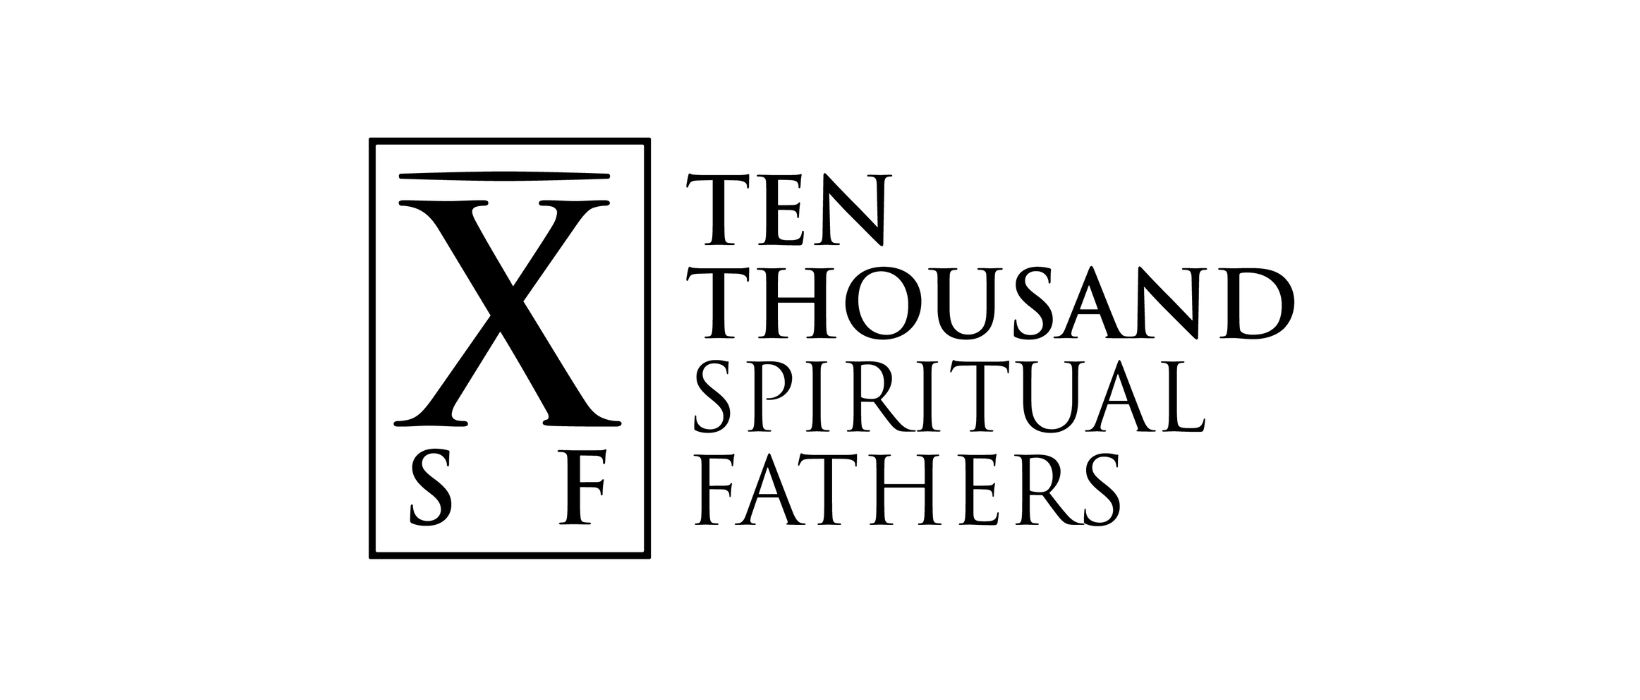 Ten thousand spiritual fathers